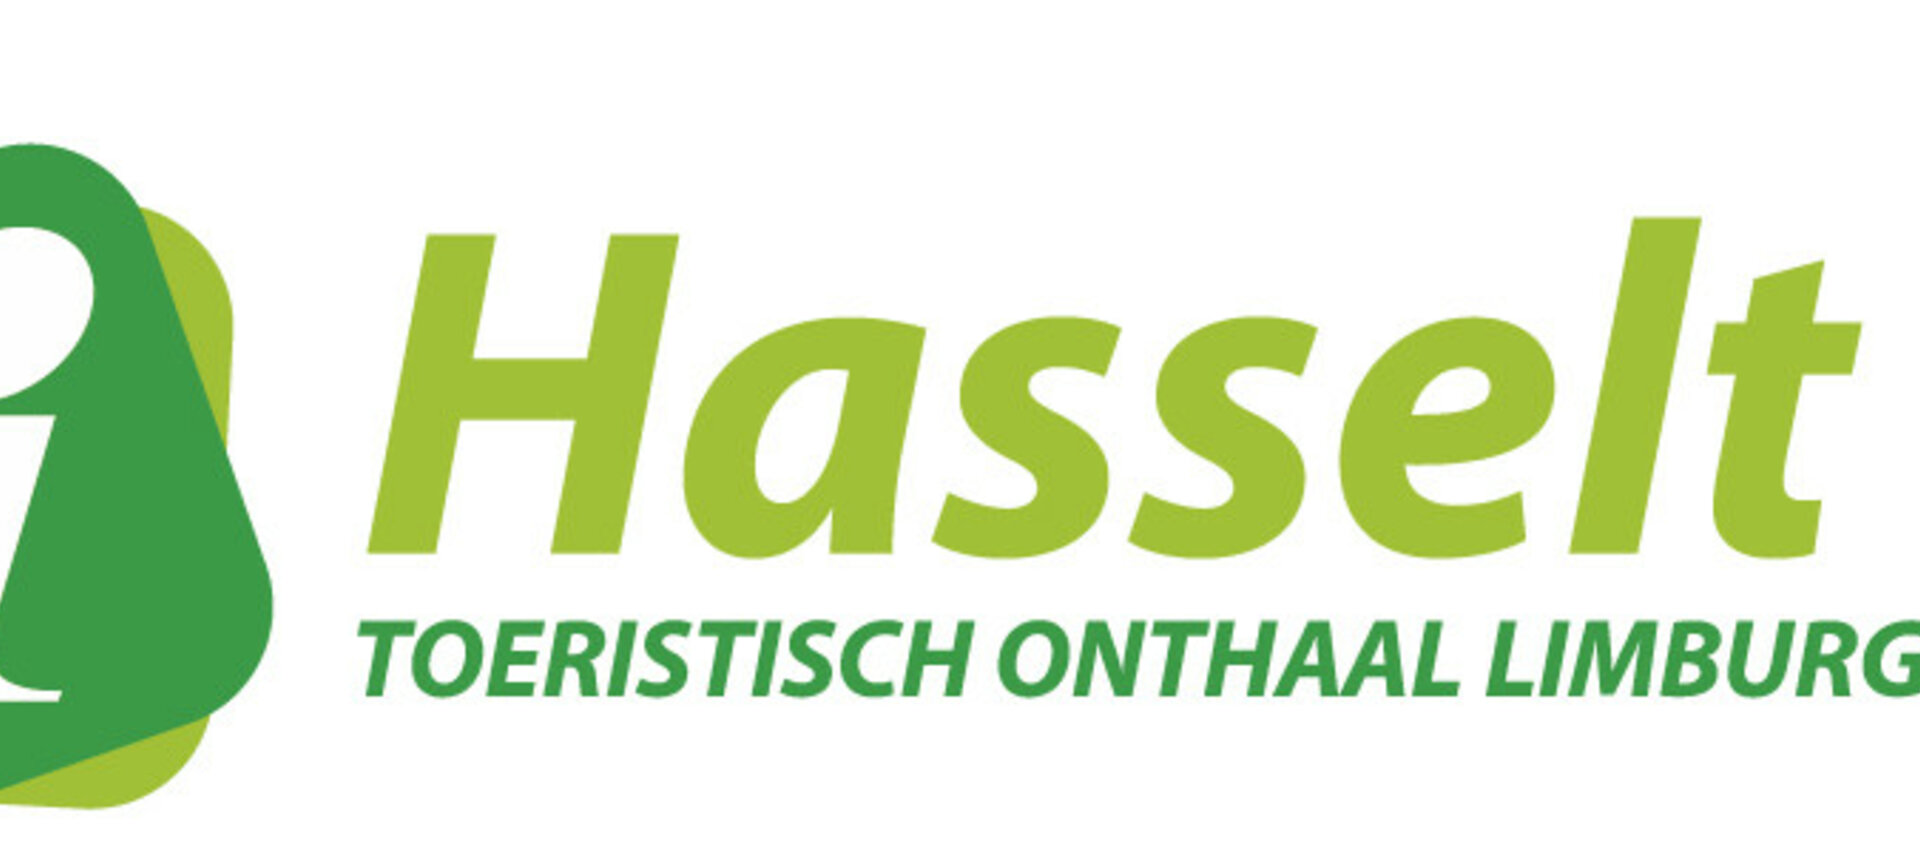 Visit Hasselt - Toeristisch onthaal Limburg - Hasselt